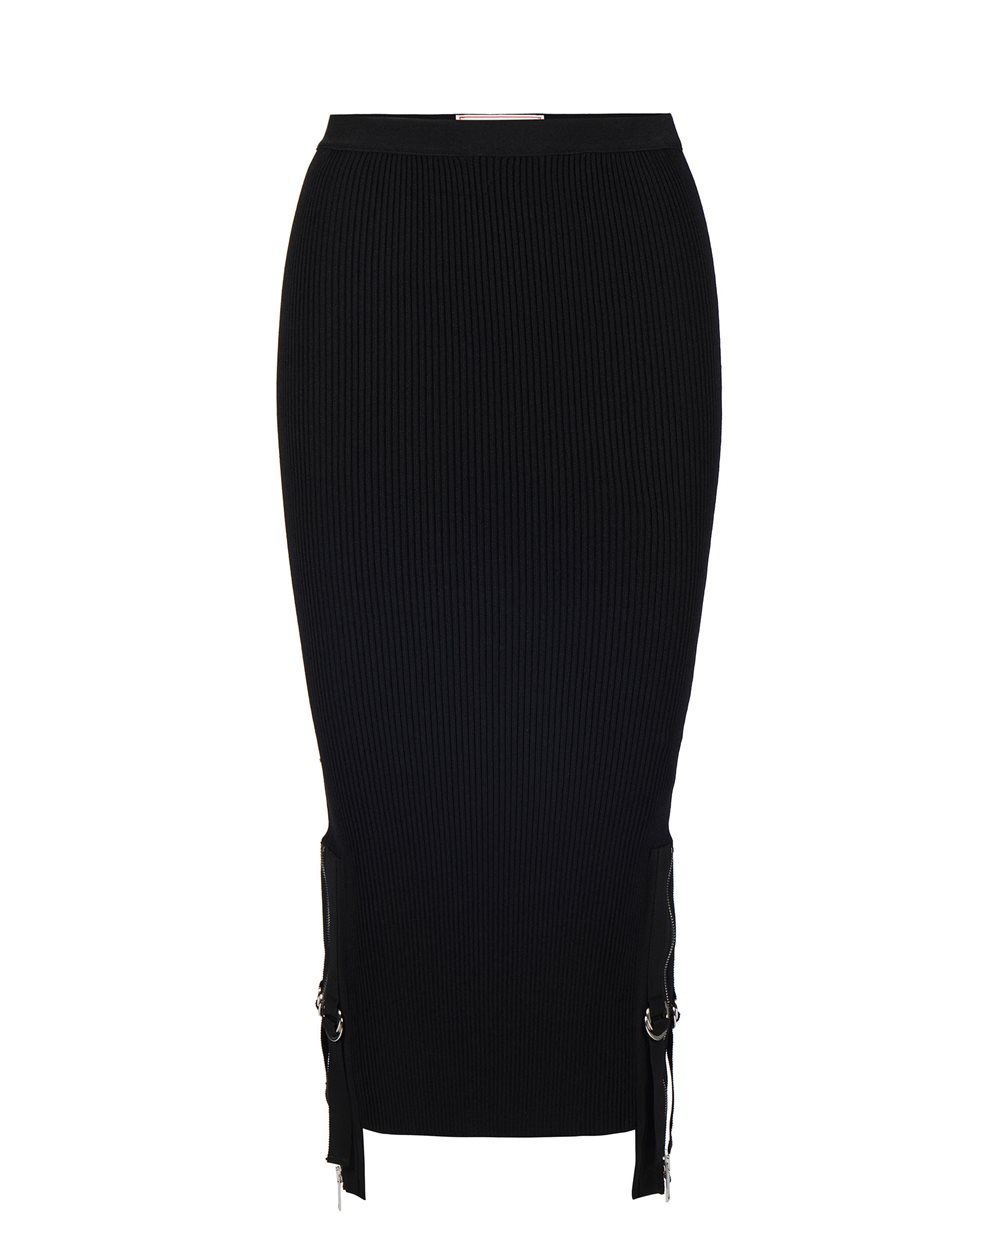 Black pencil skirt - Knitwear | Iceberg - Official Website